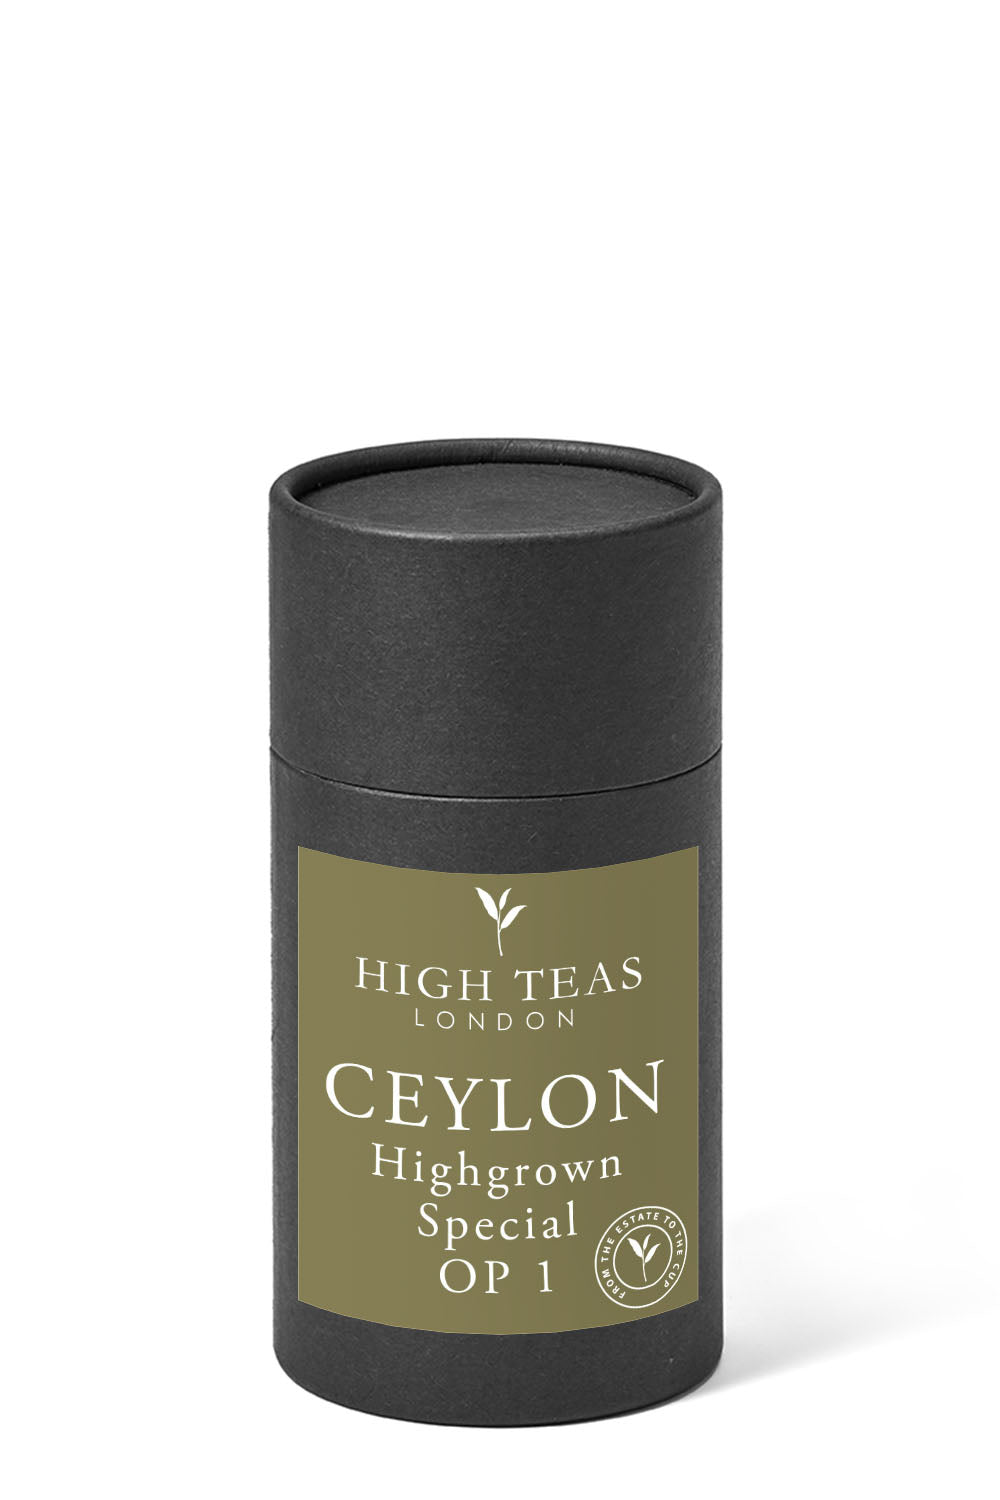 Ceylon - Highgrown Special OP 1-60g gift-Loose Leaf Tea-High Teas